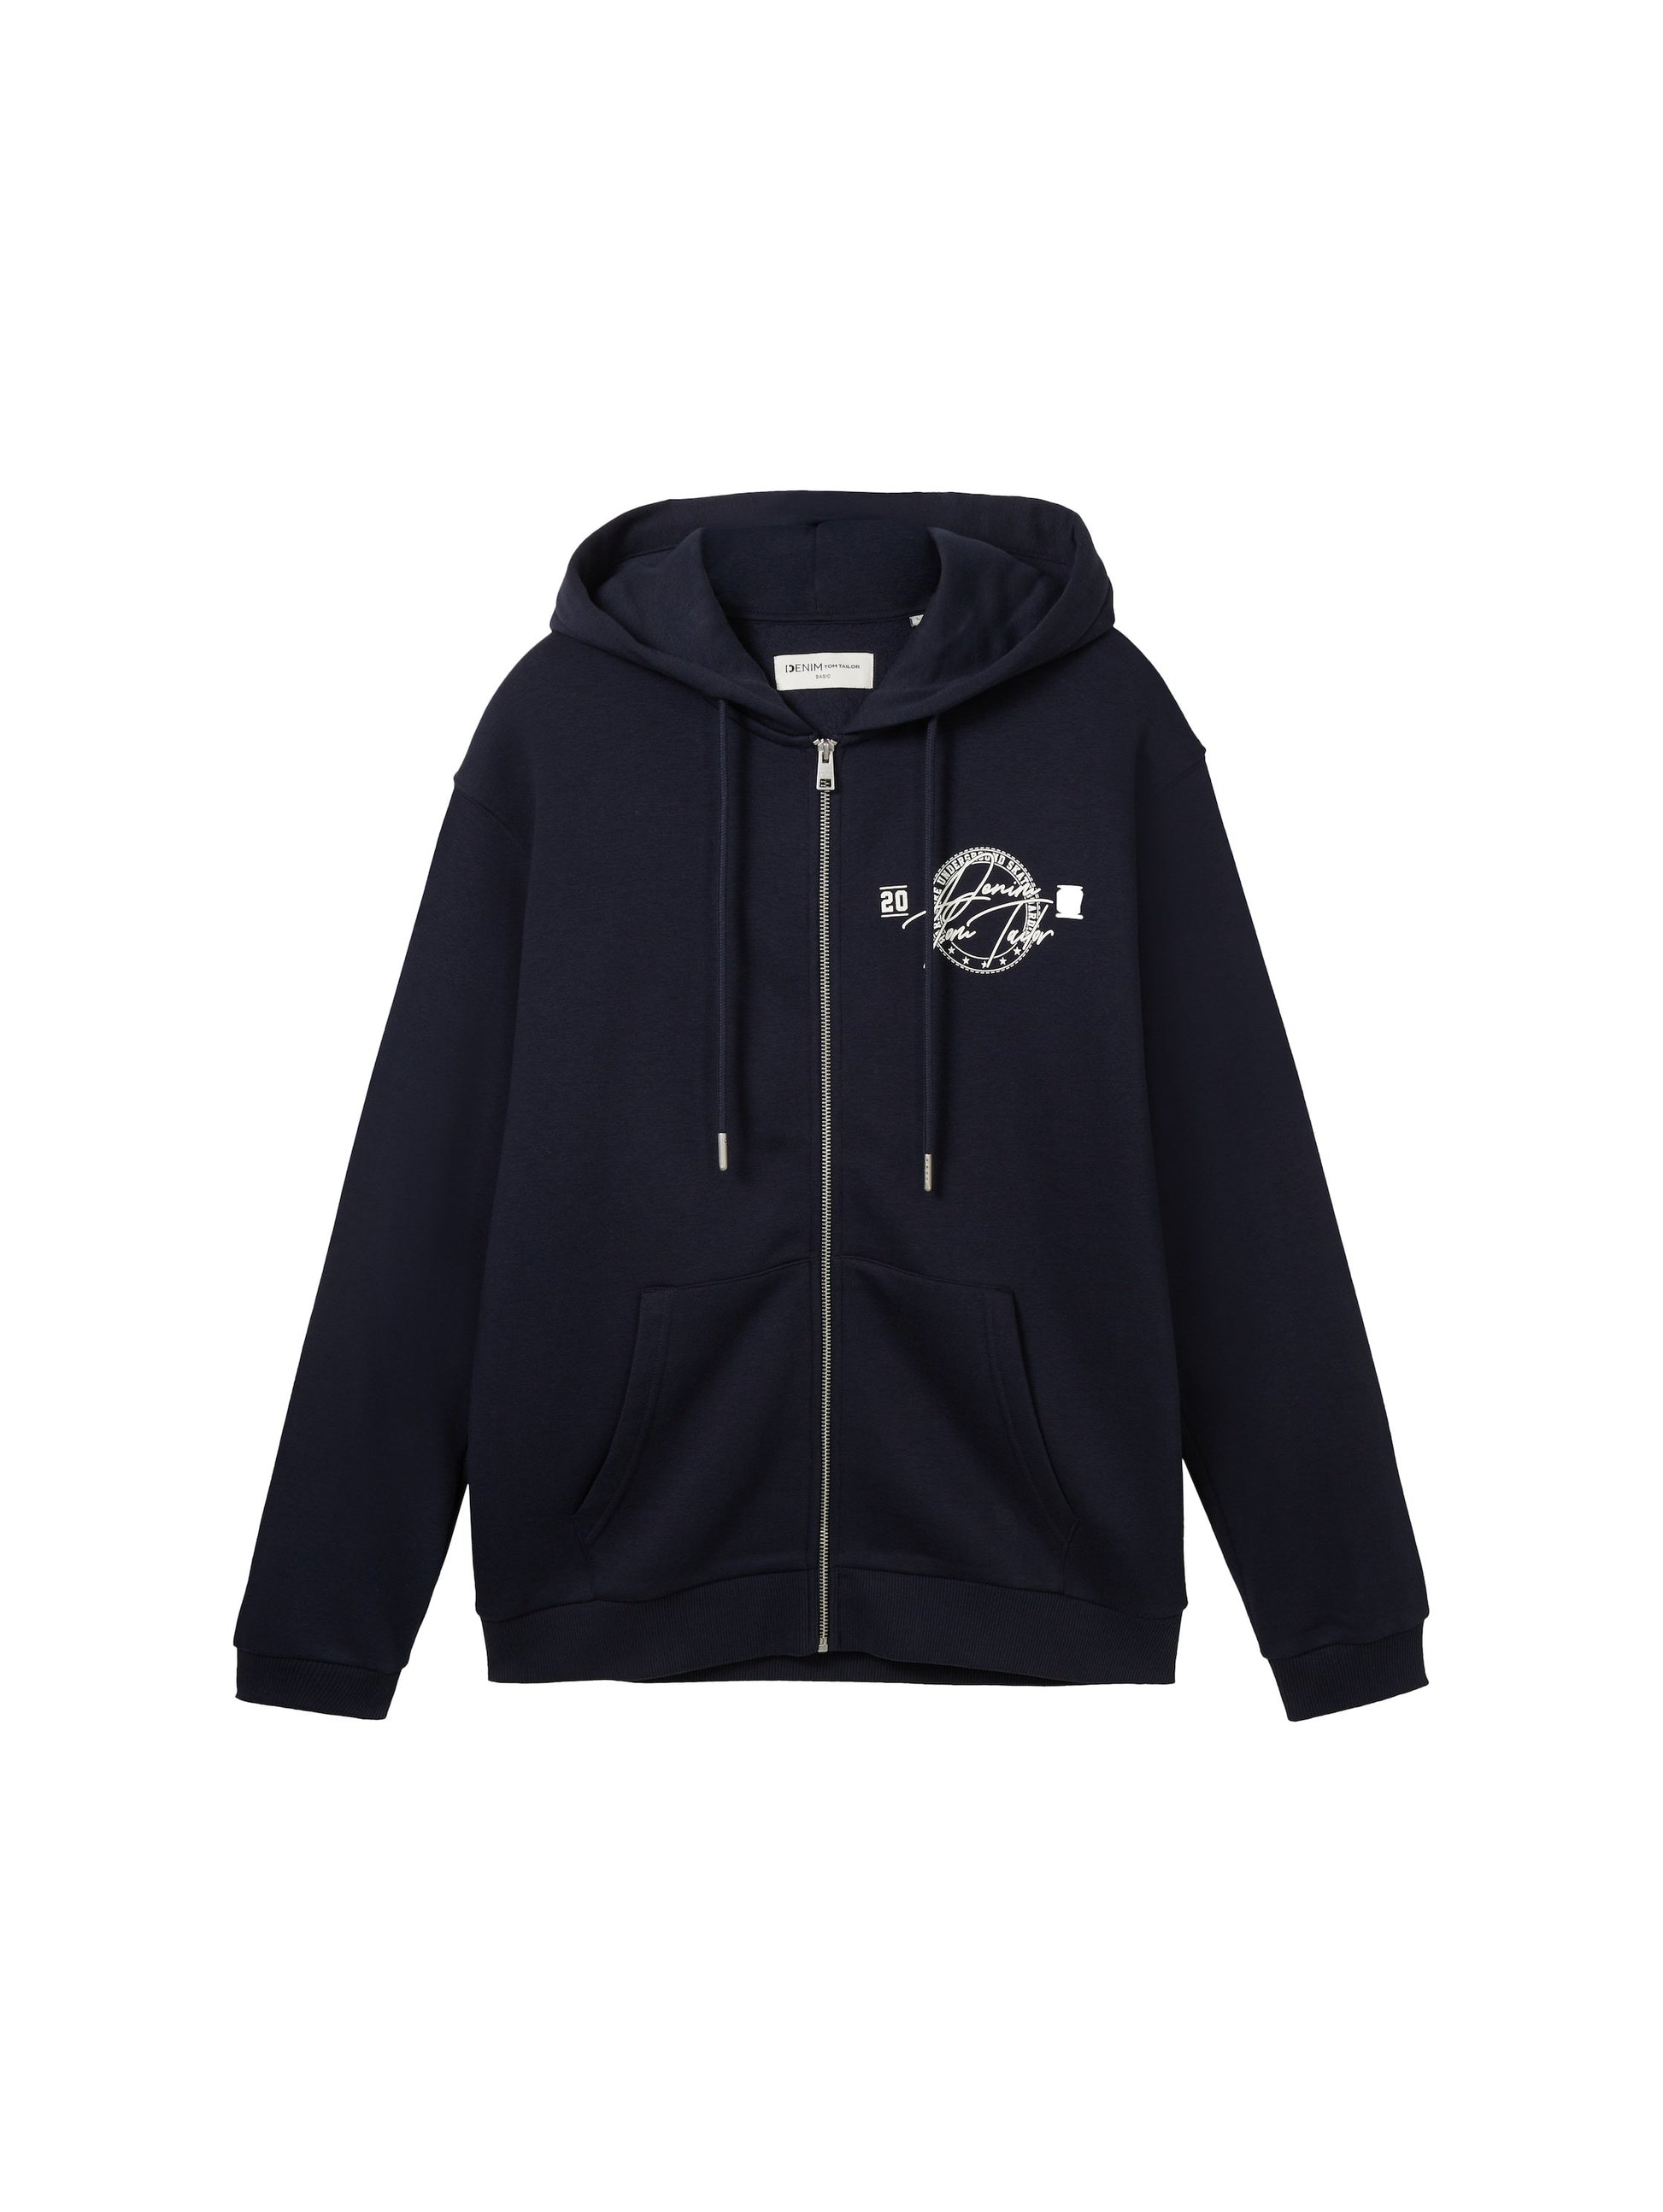 hoodie jacket with print – Modehaus Blum-Jundt